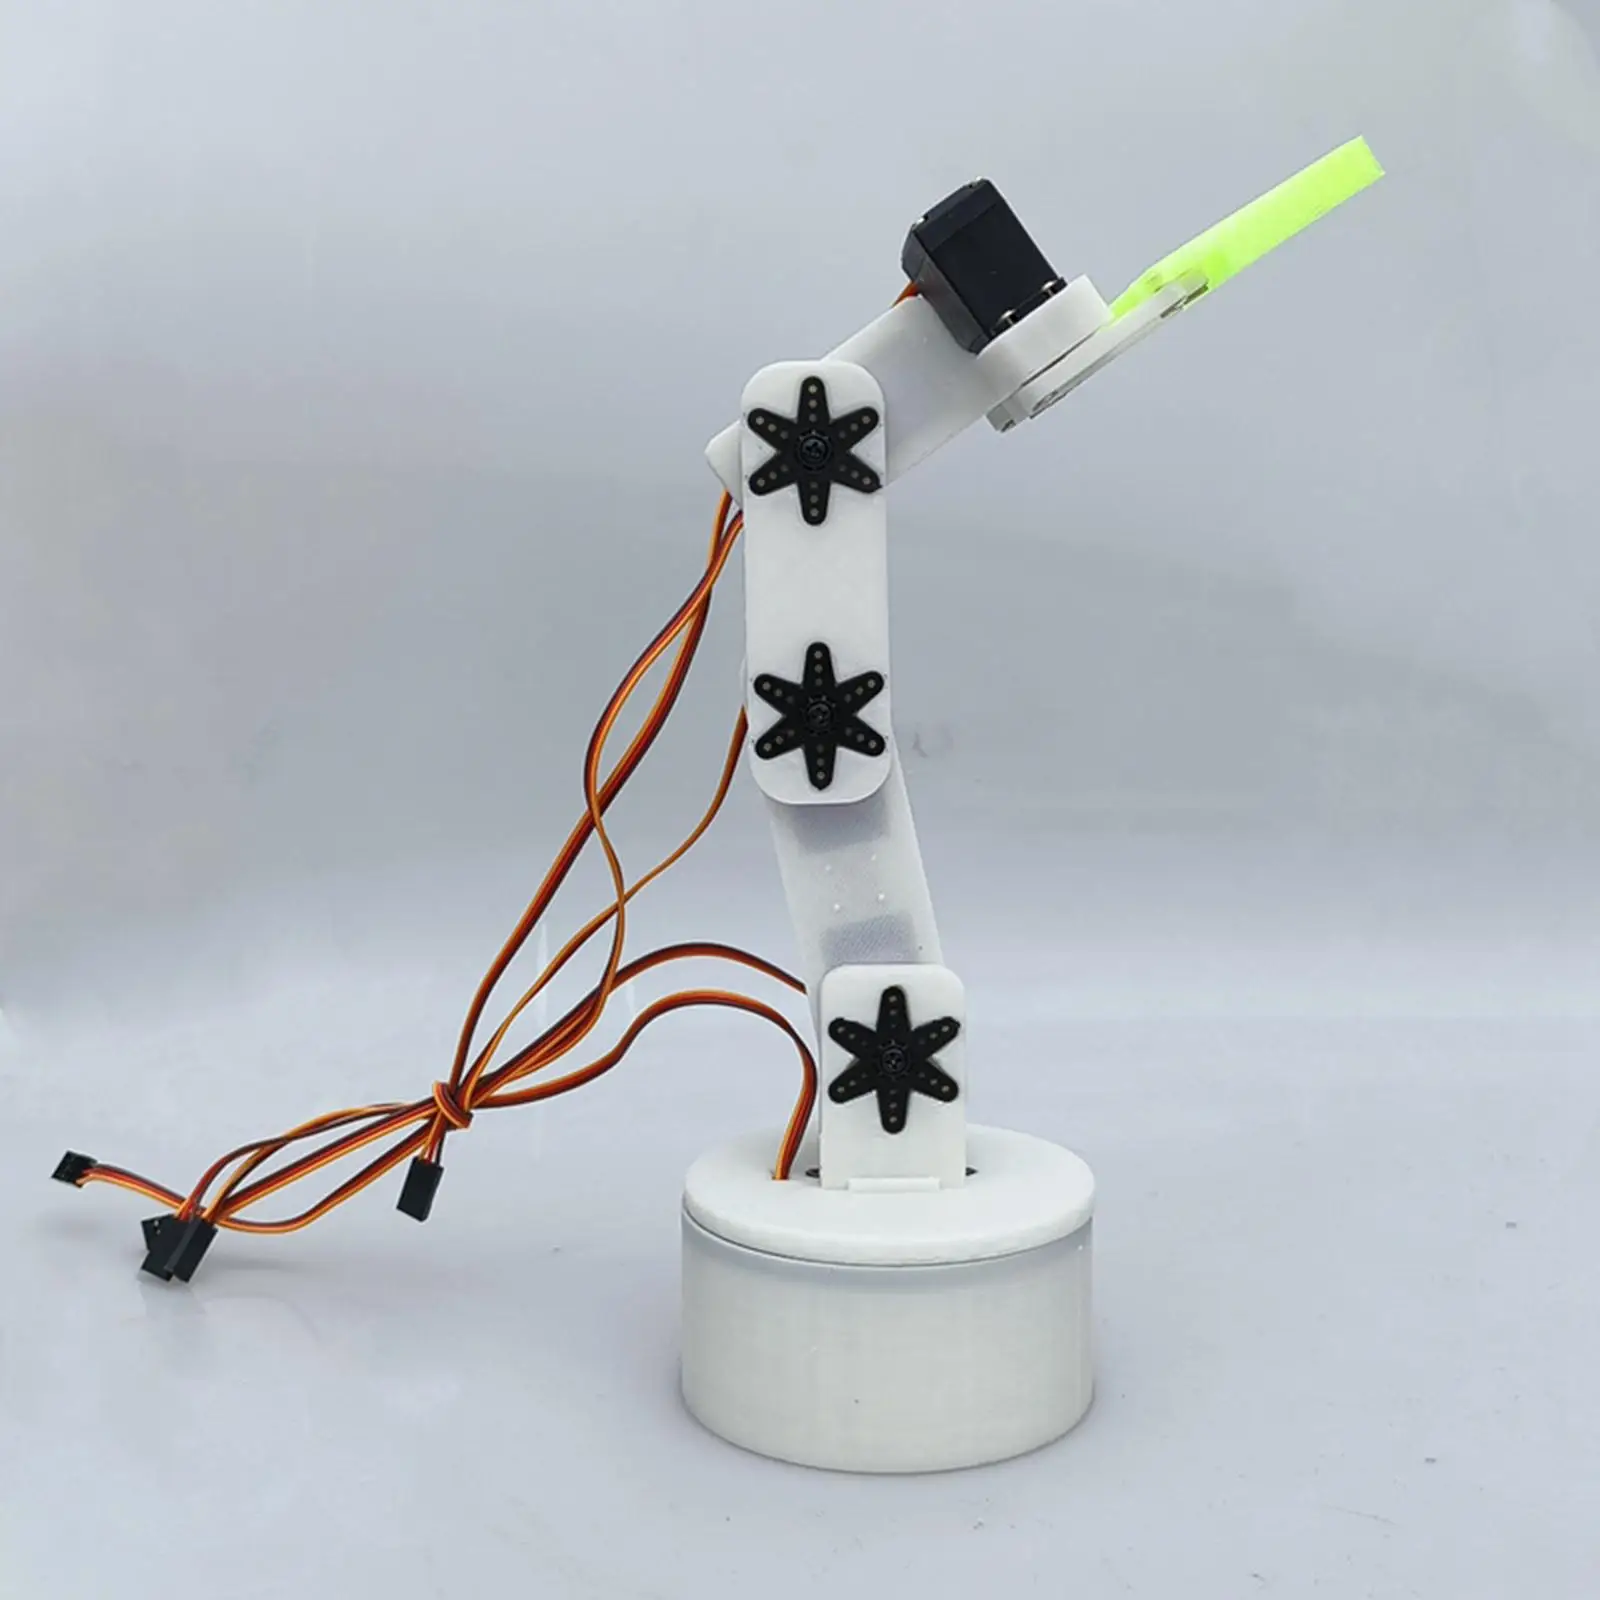 Robot Arm Kit Starter Kit Manipulator DIY Electronic Kits DIY Assembly Robotic Claw Mechanical Grab for Kids Teens Adults